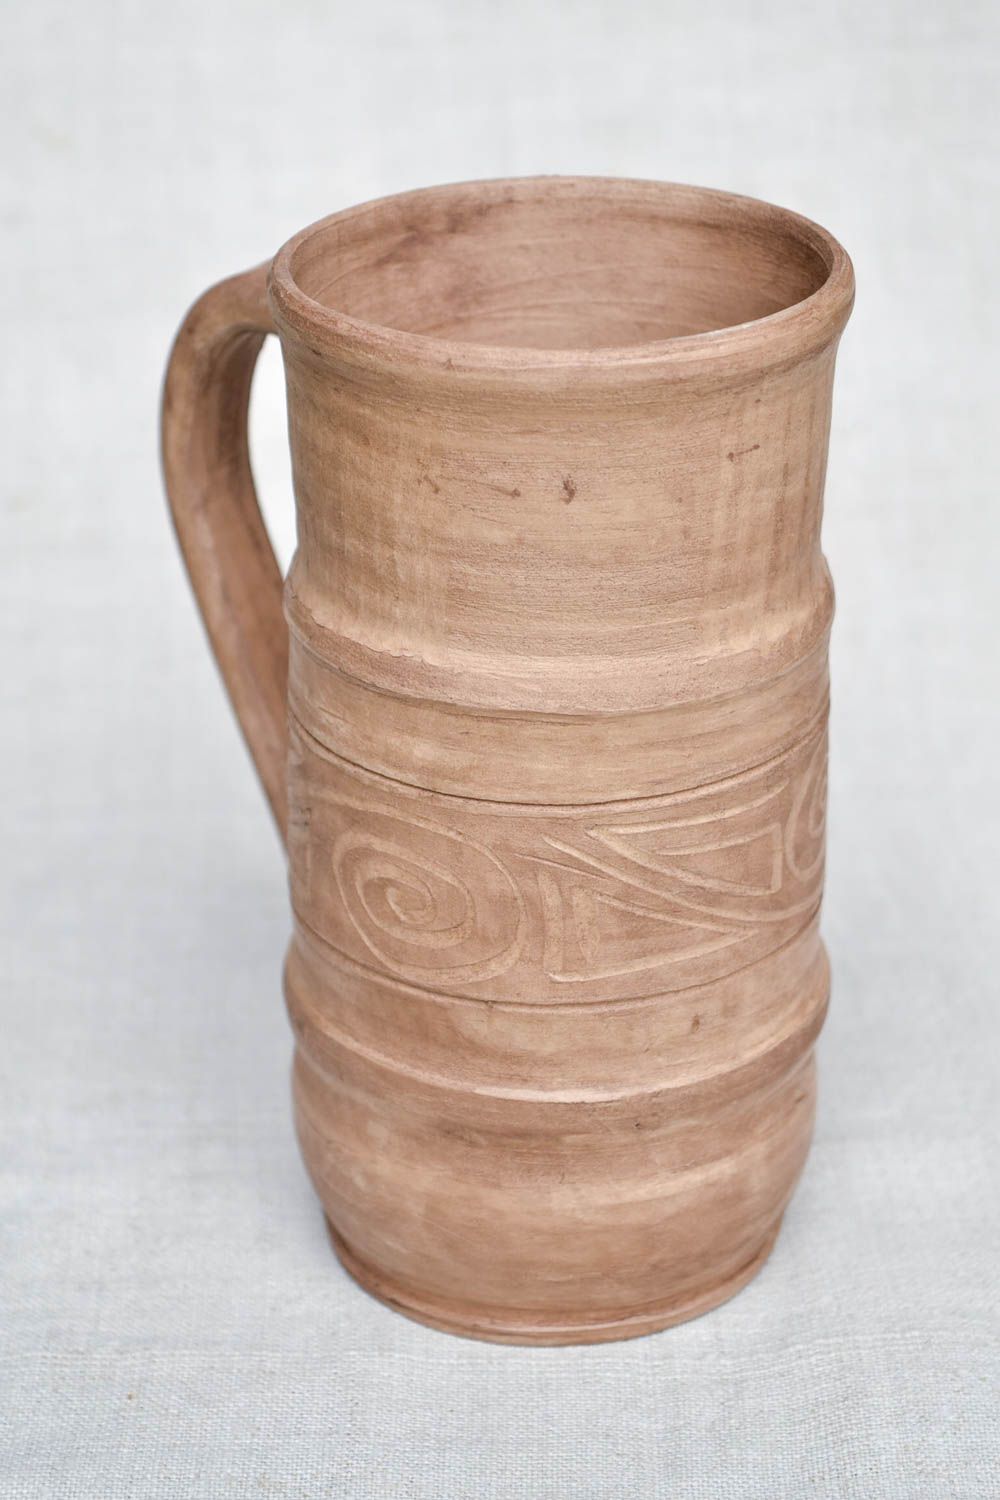 Unusual handmade ceramic beer mug pottery works table setting kitchen supplies photo 3